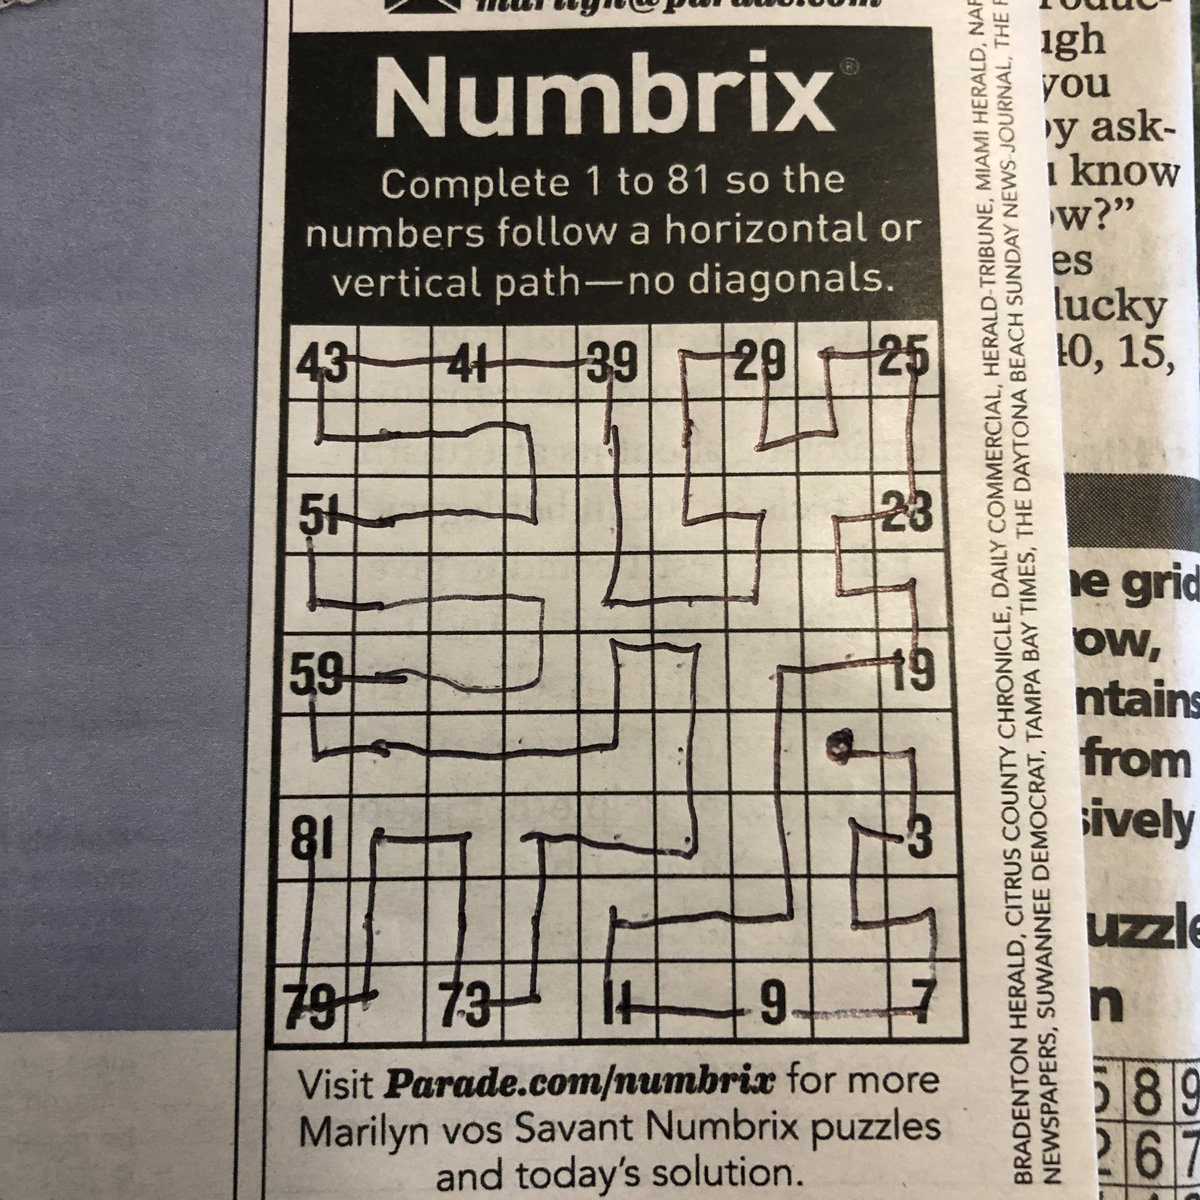 Numbrix Parade Puzzles Play numbrix, parade magazine's hit puzzle by